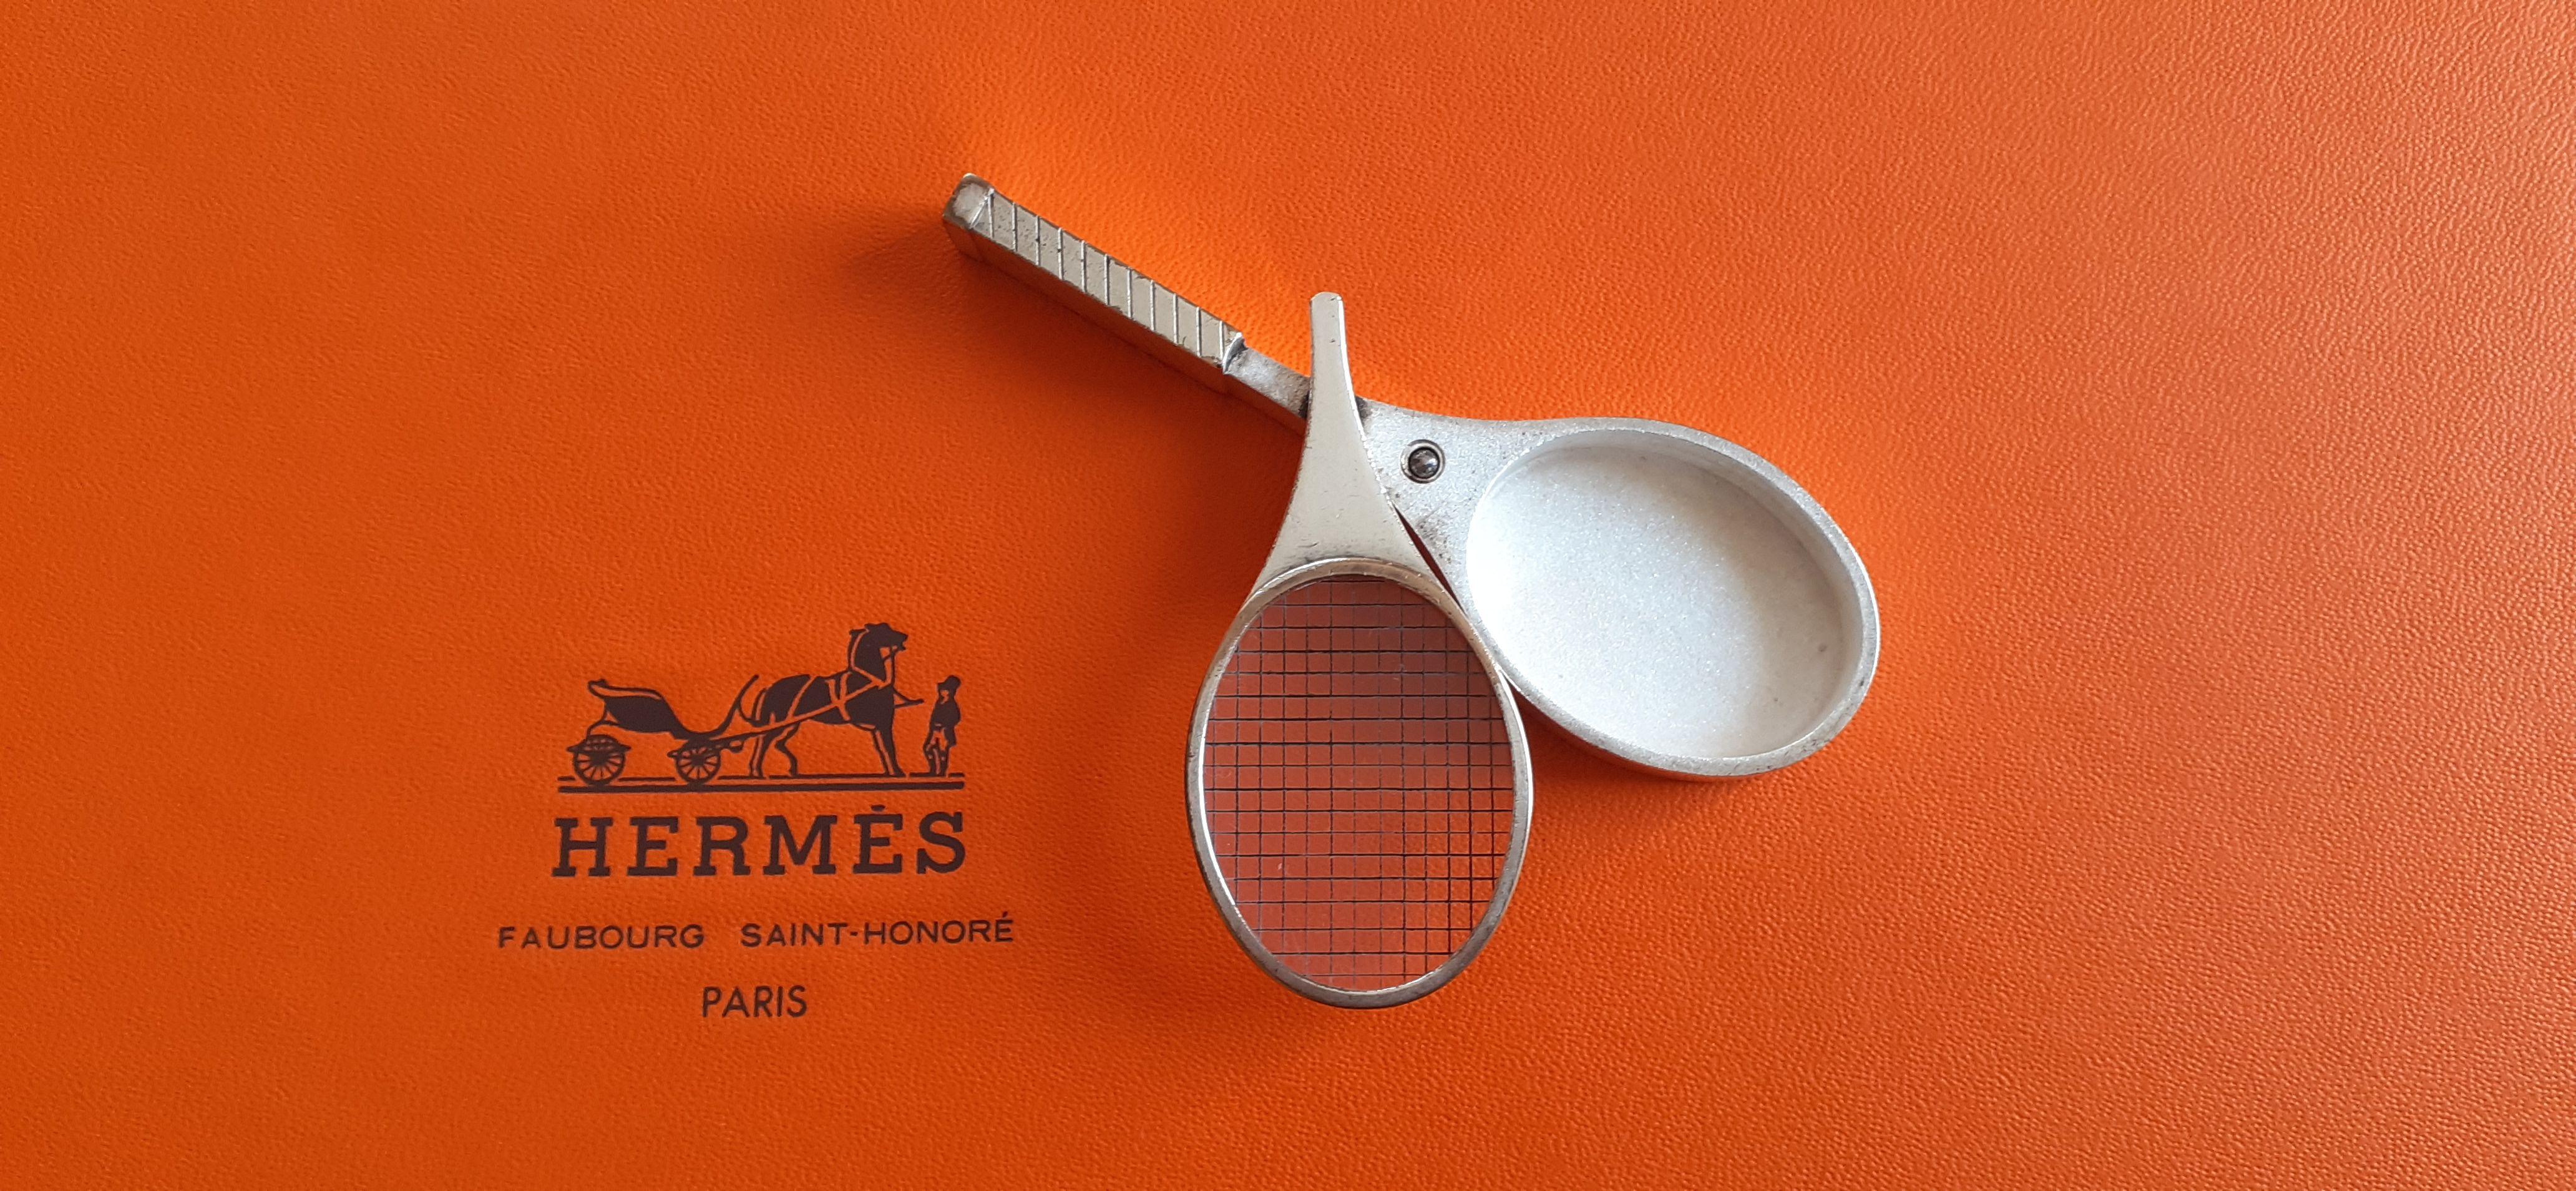 Exceptional Hermès Tennis Racquet Shaped Pill Box Rare For Sale 4